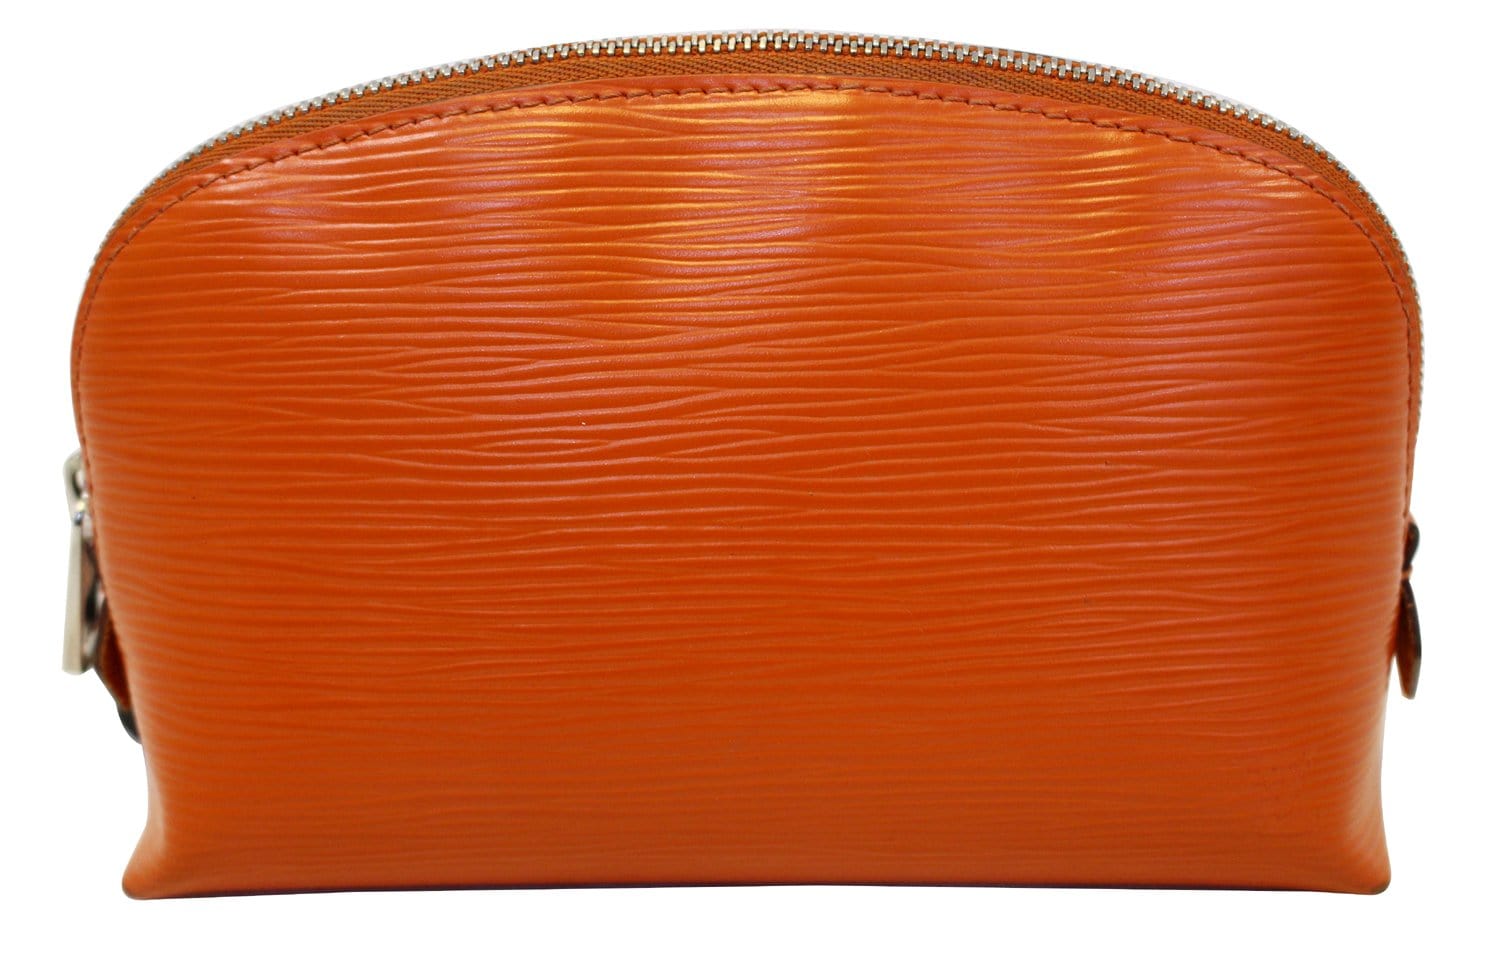 WE 🧡 ORANGE • Louis Vuitton Pochette in Epi Leather